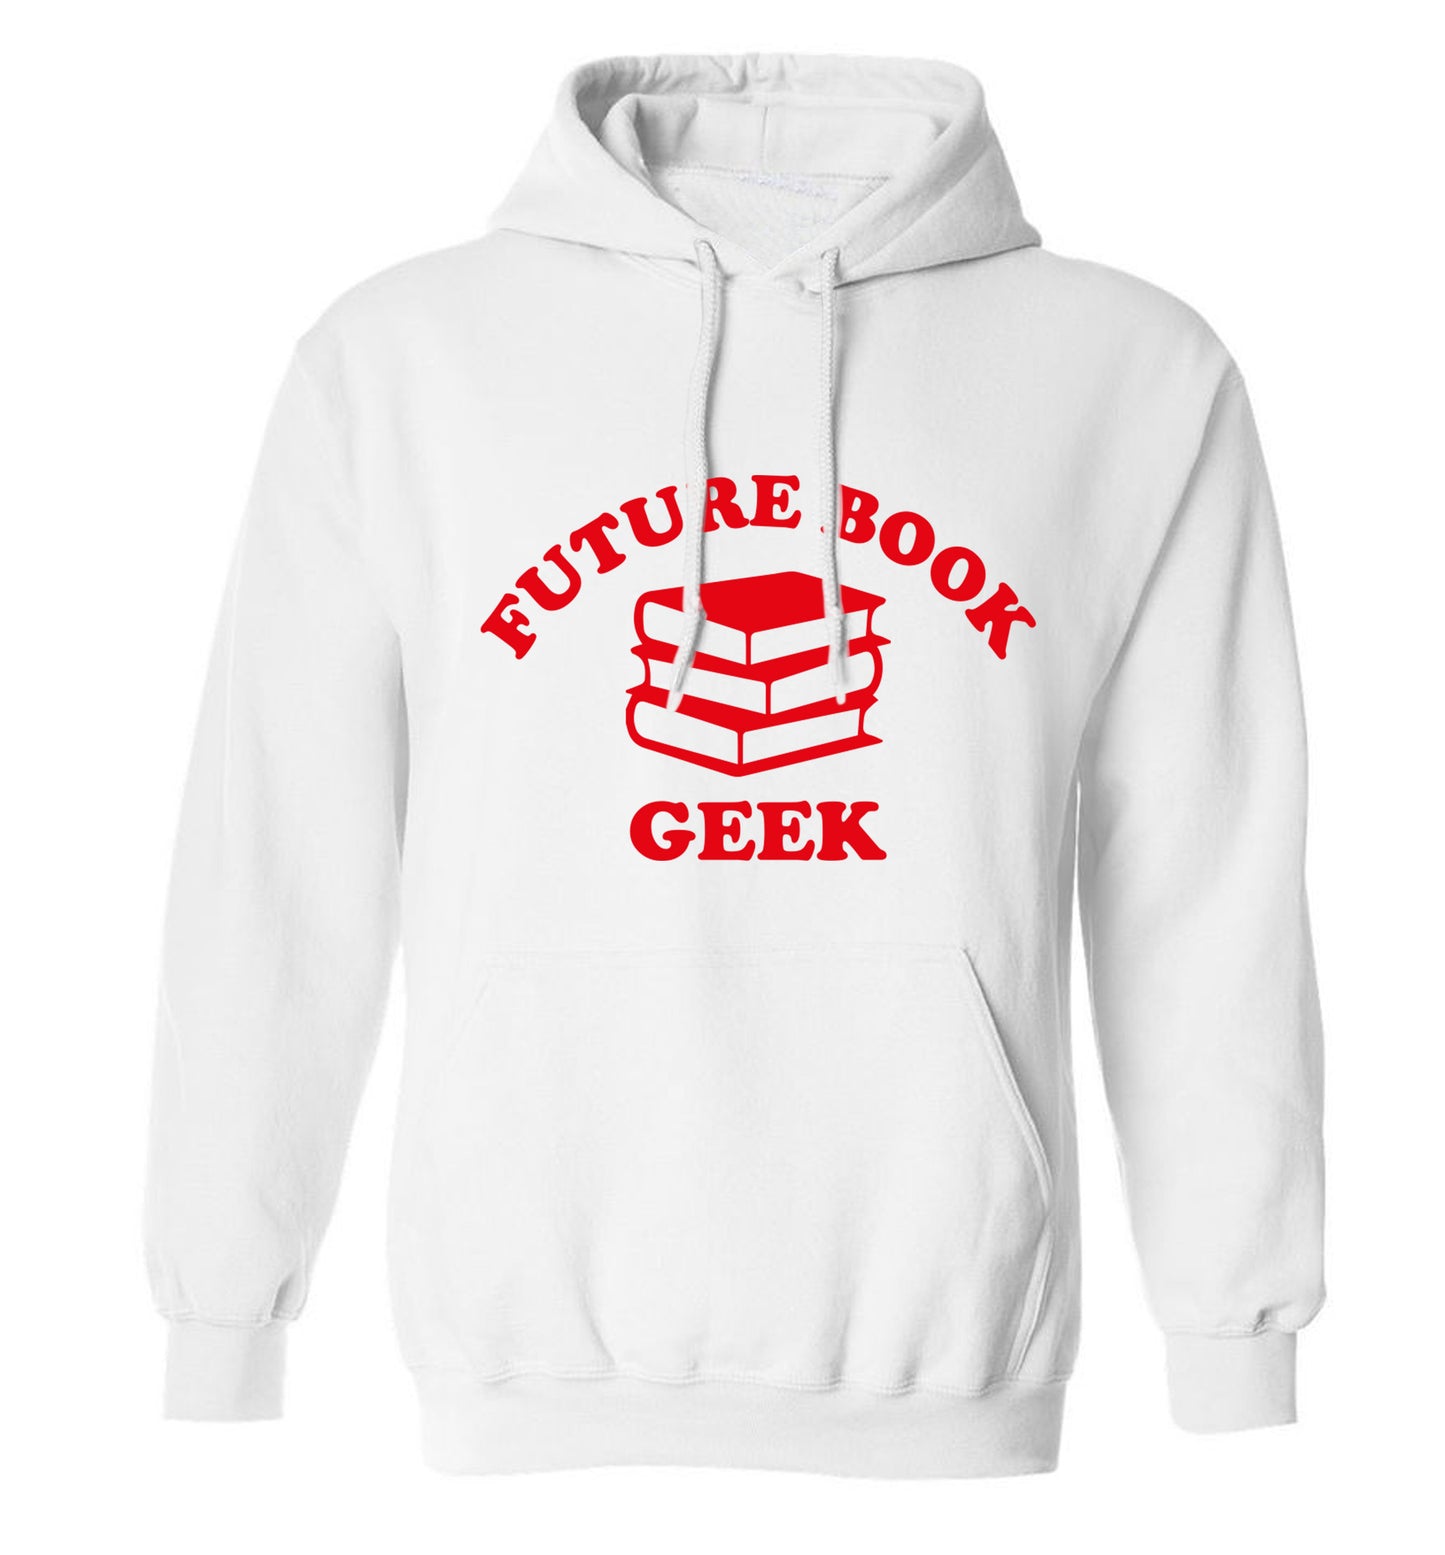 Future book geek adults unisex white hoodie 2XL